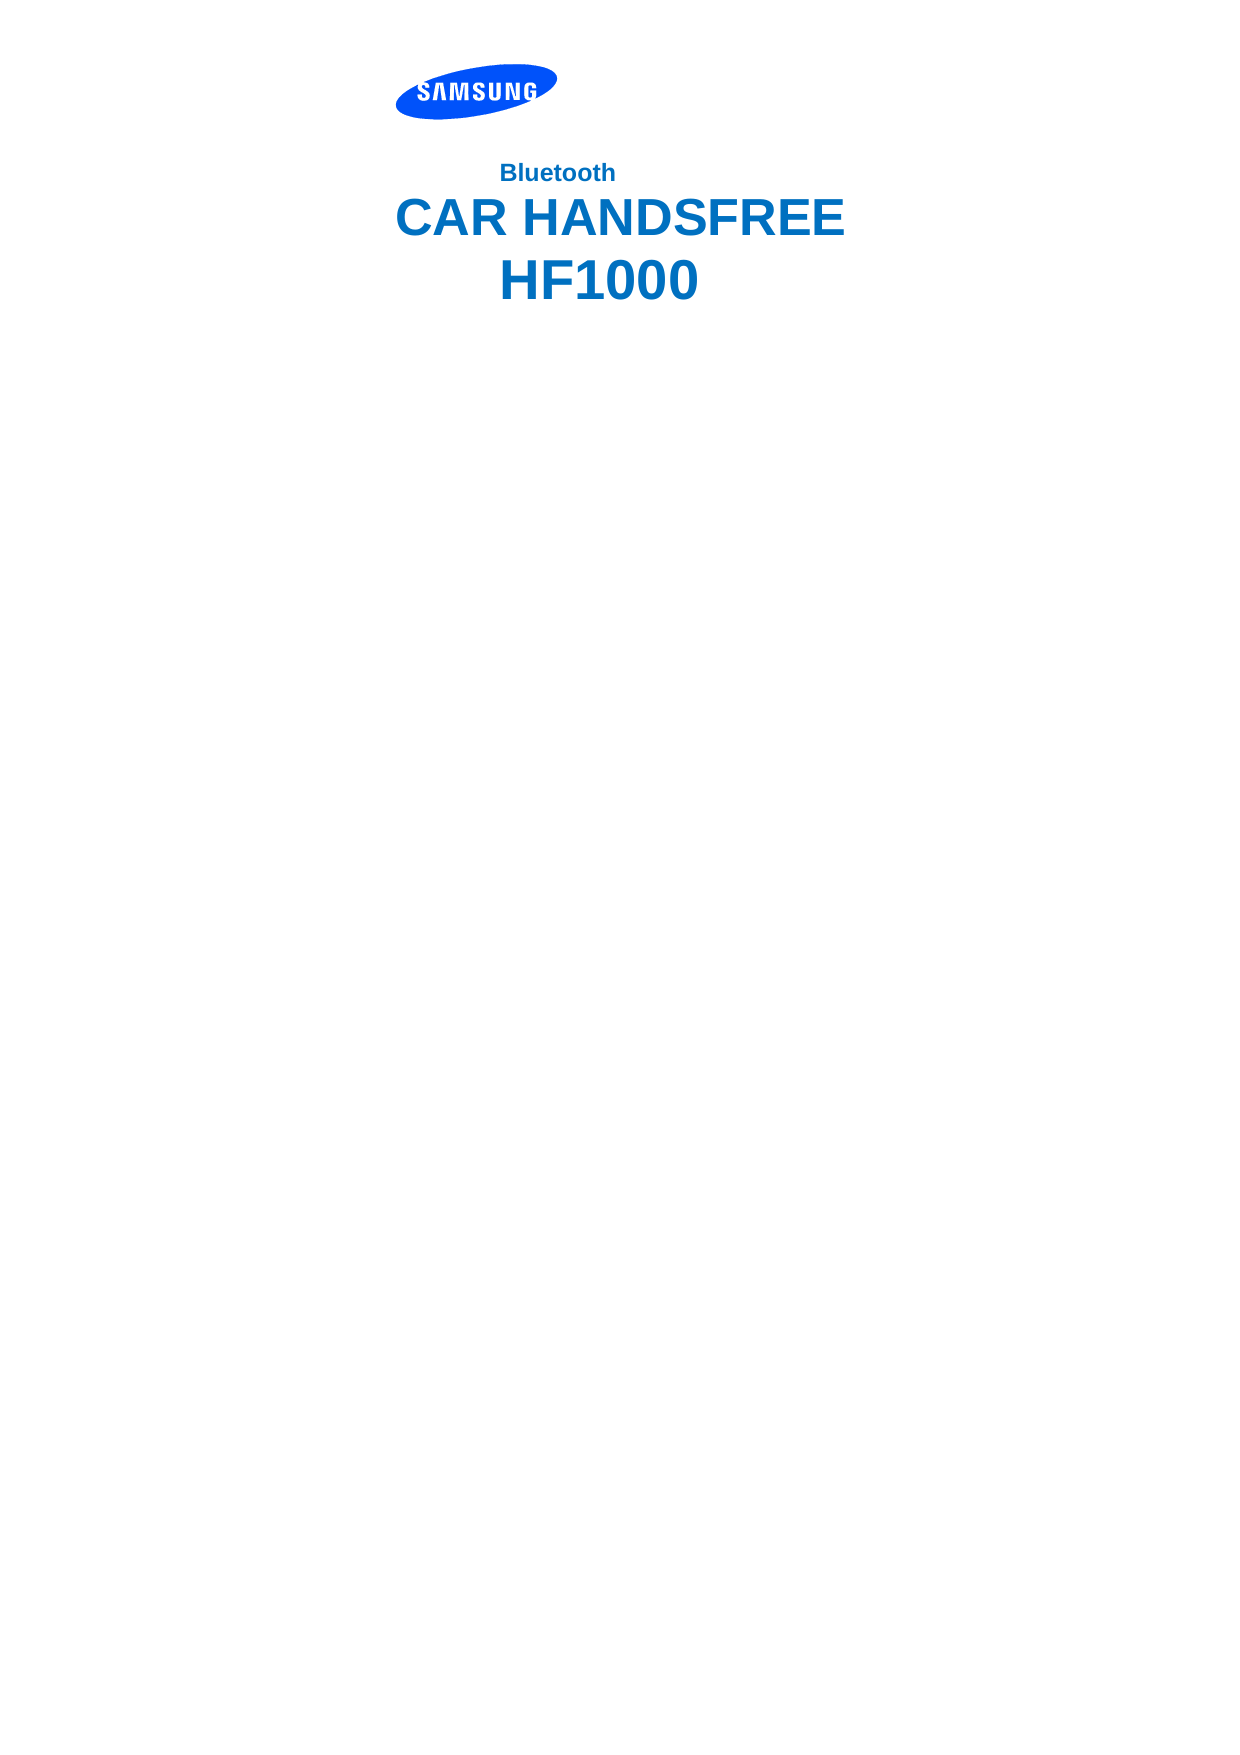    Bluetooth CAR HANDSFREE HF1000   